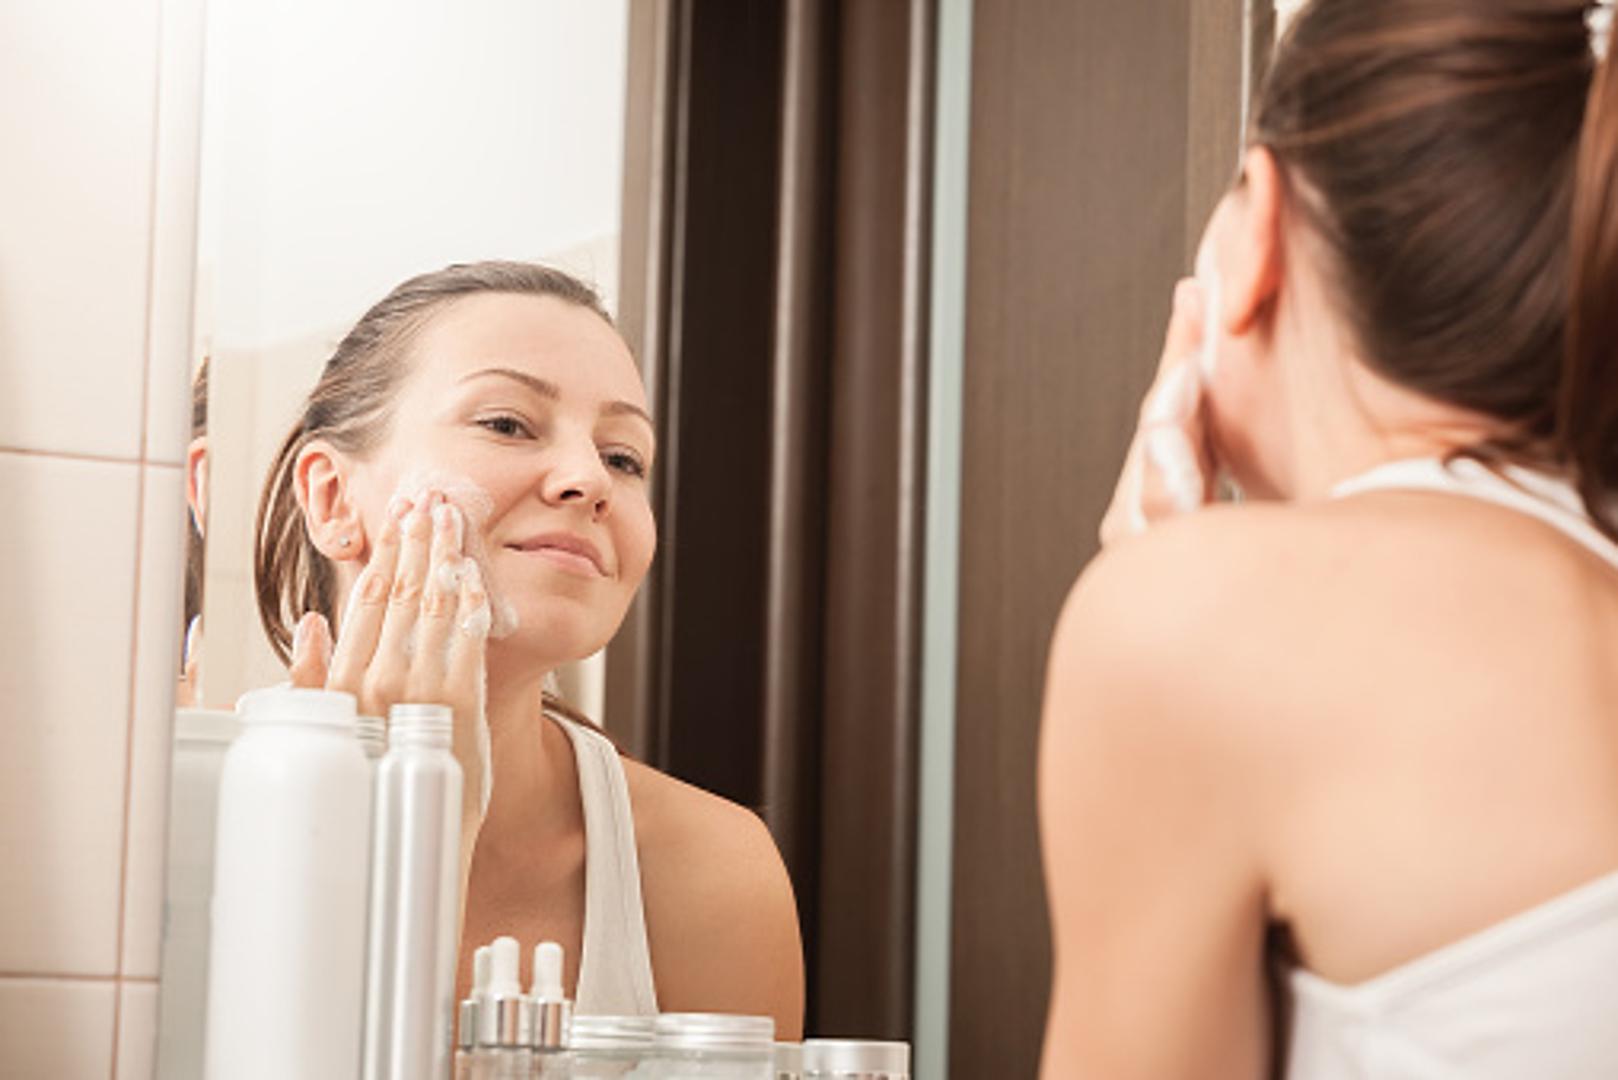 Stručnjakinja za njegu kože objavila je na društvenim mrežama metodu za pravilno čišćenje lica #60secondrule, i pri tom pojasnila kako ima itekako dobar razlog za to. 